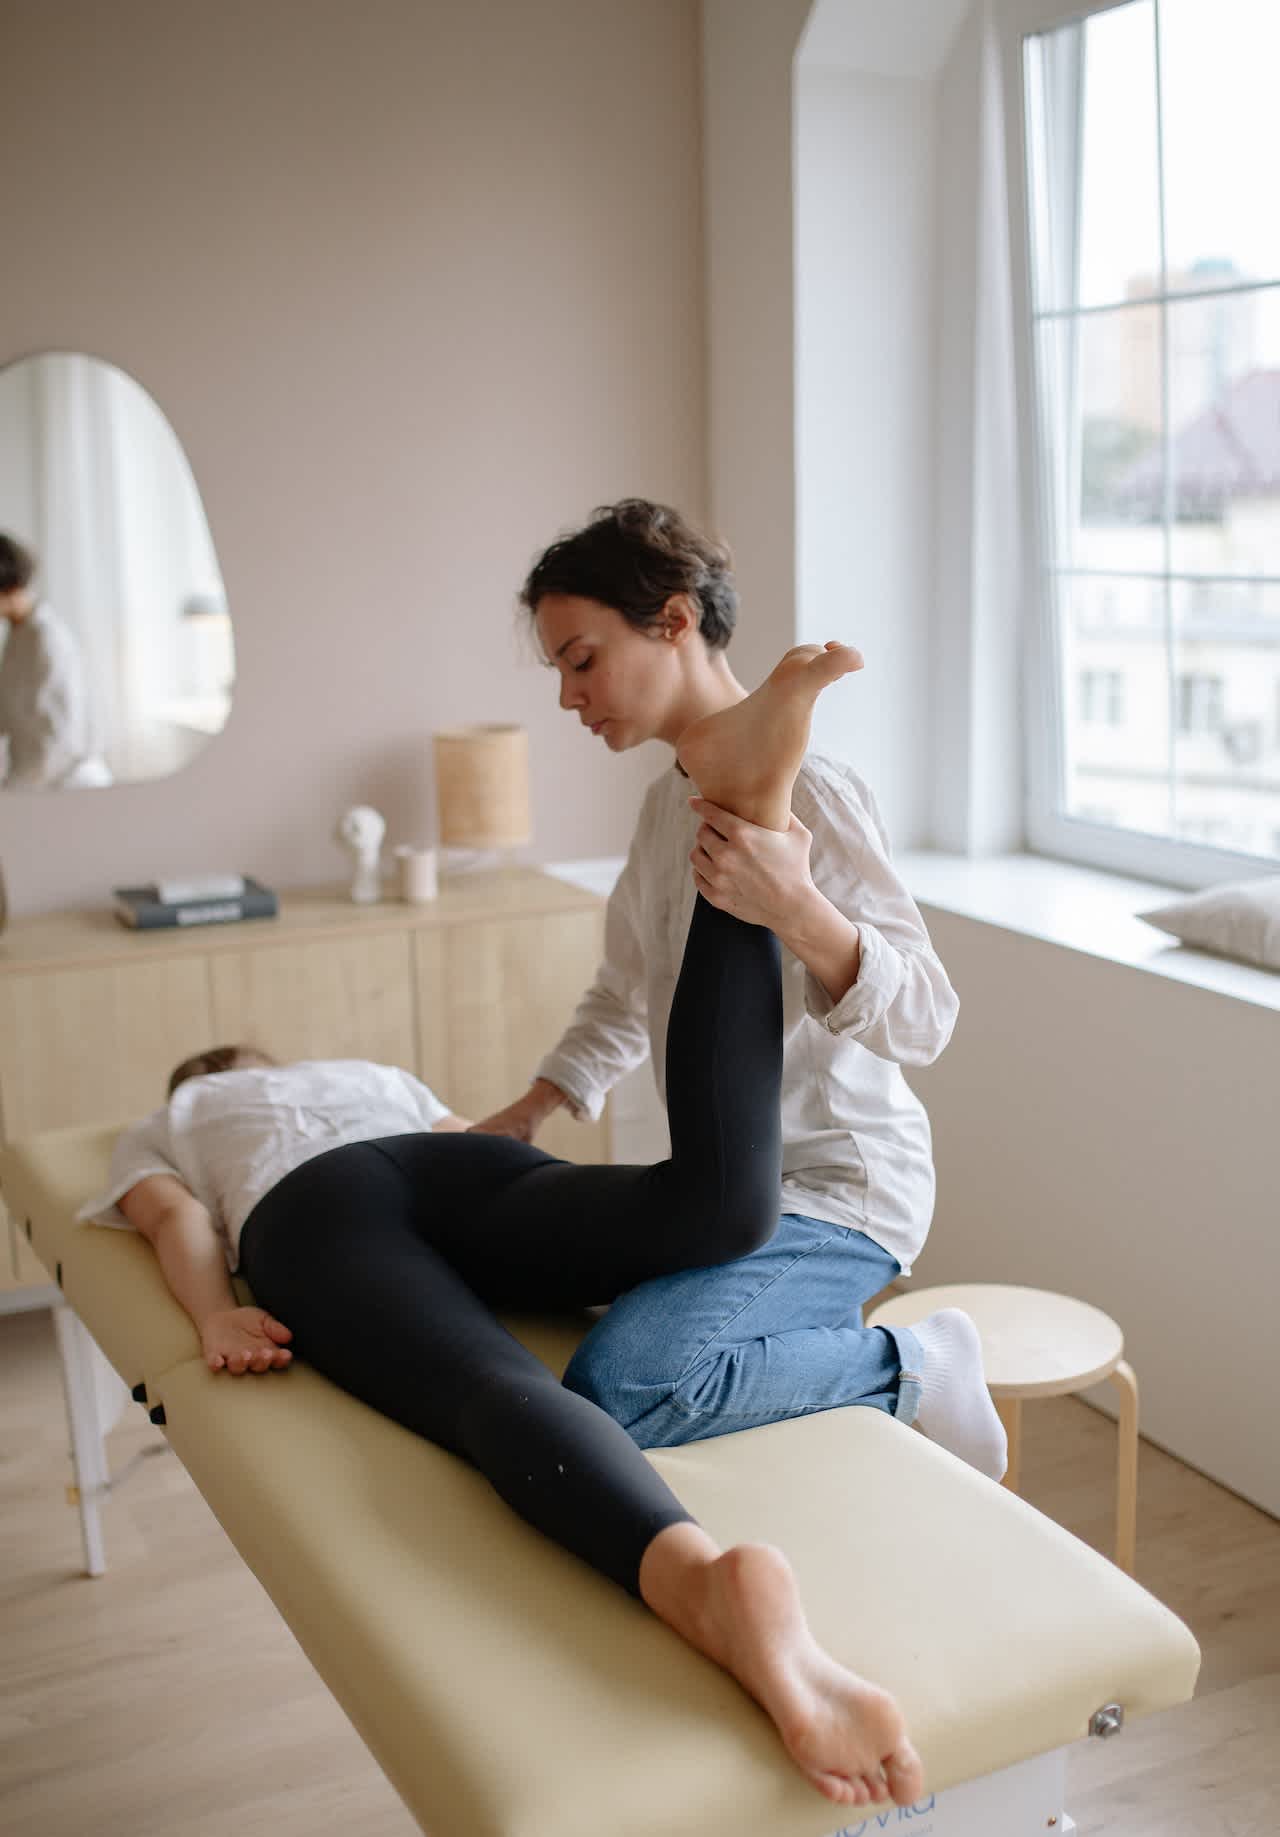 Massage therapist working on woman's leg